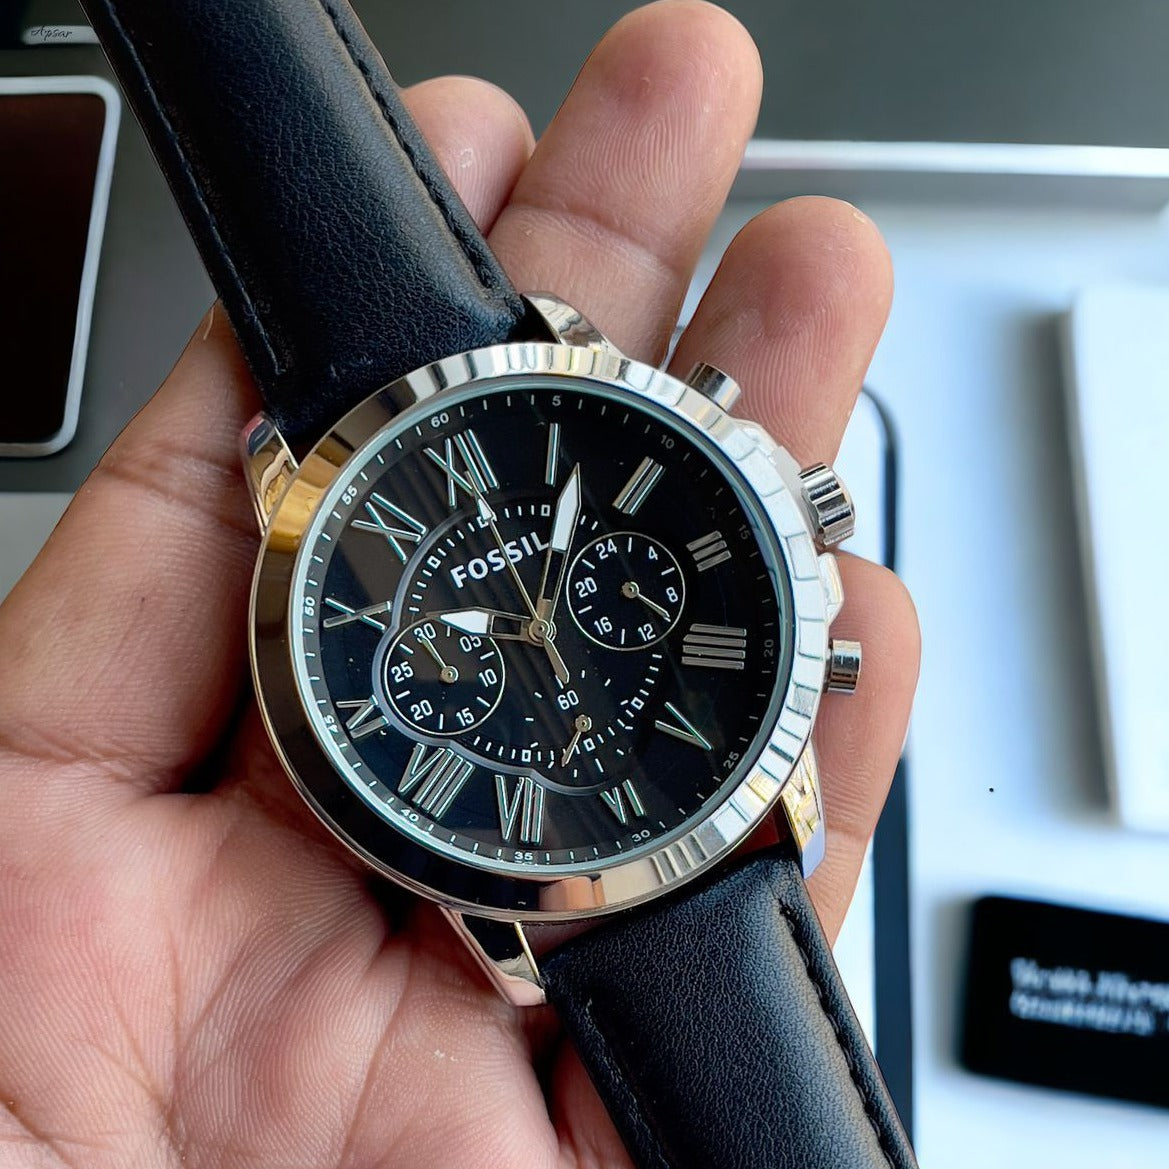 Fsl premium Grant FS4812 watch - AmazingBaba